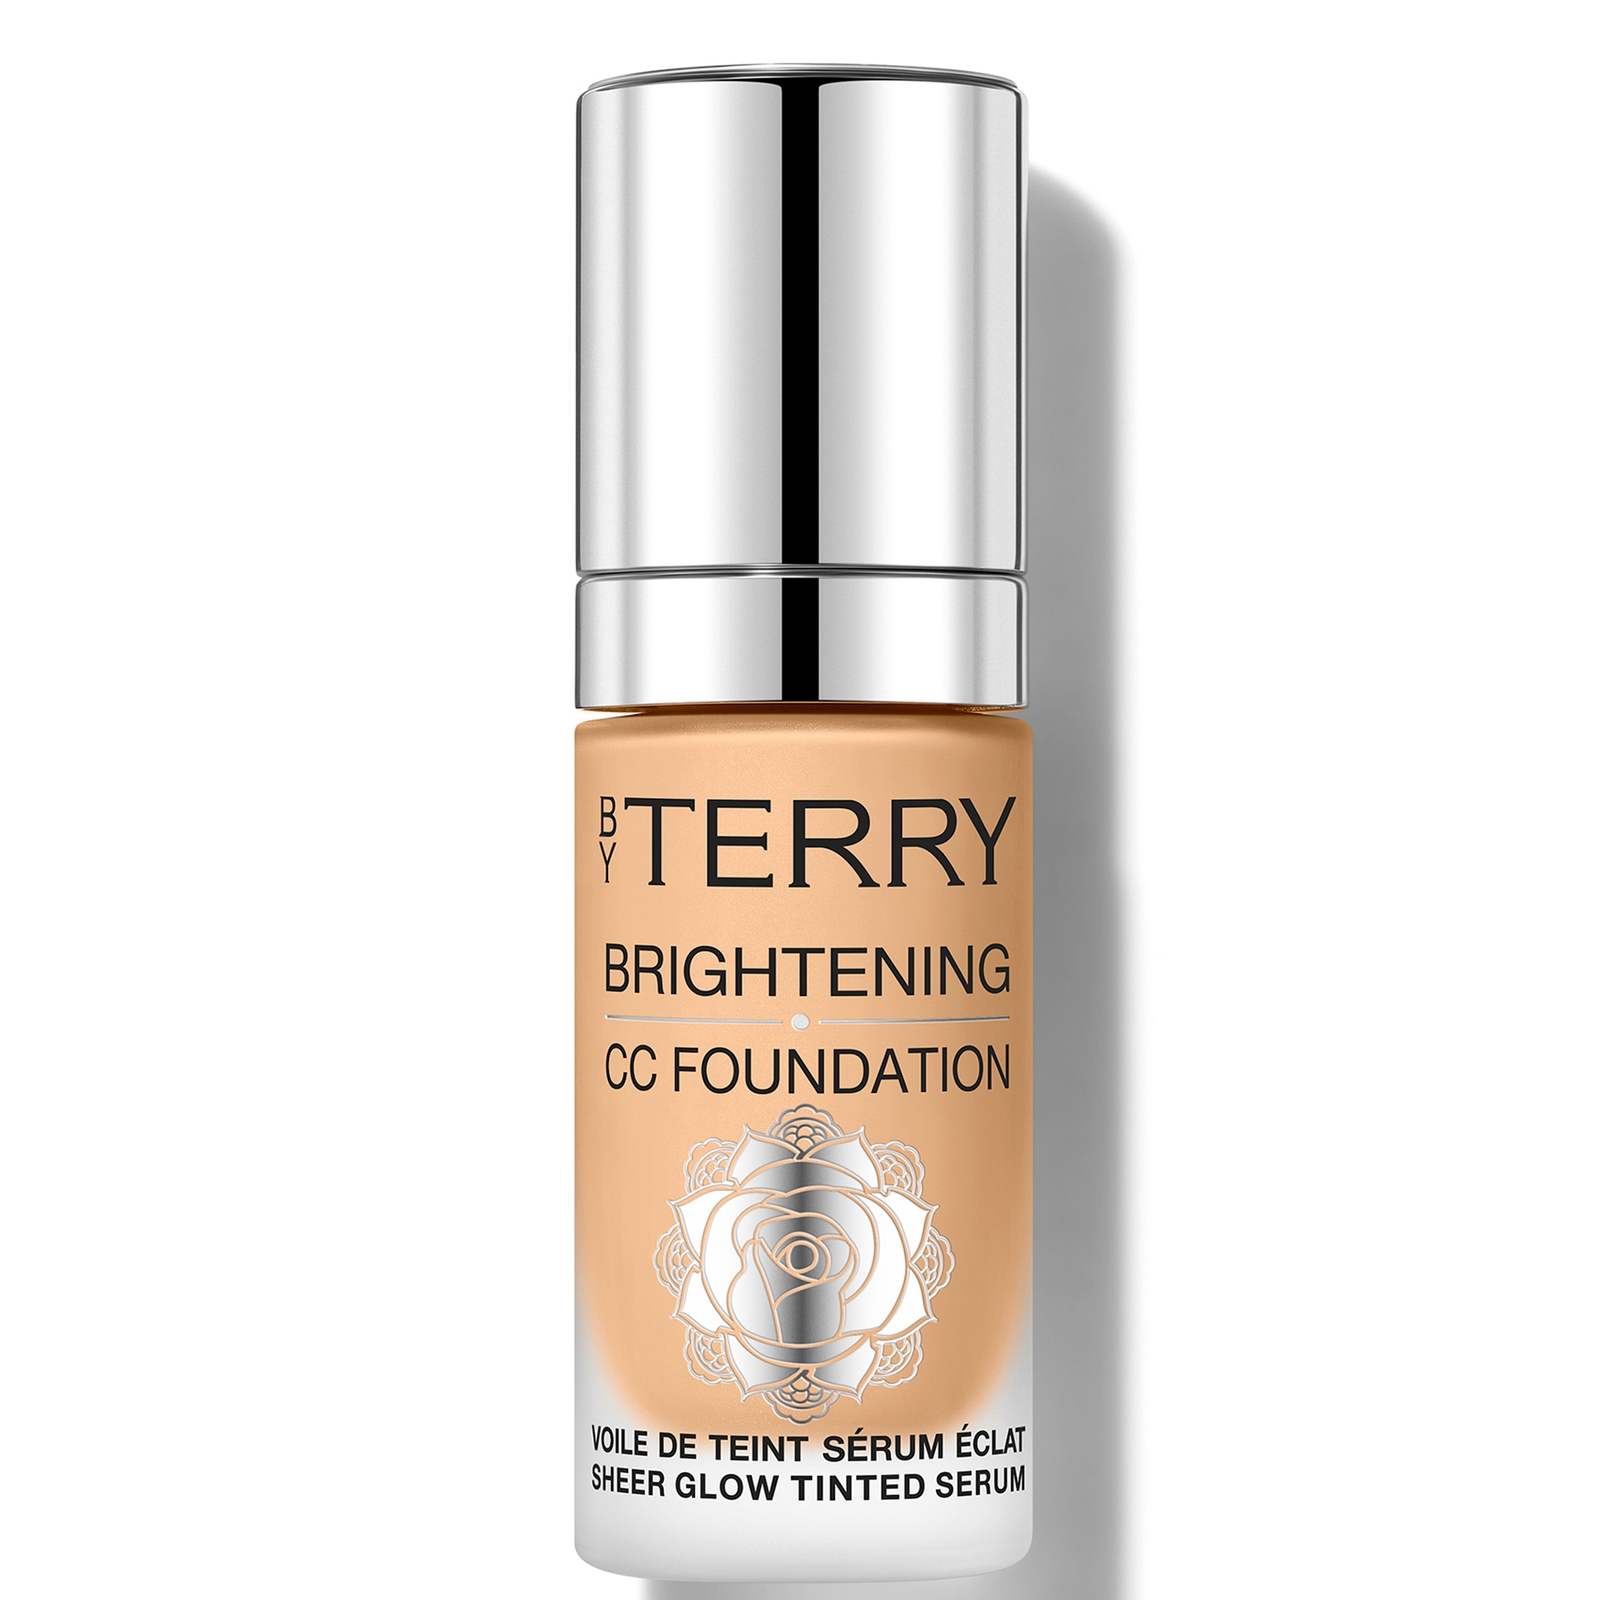 By Terry Brightening Cc Foundation 30ml (various Shades) - 5n - Medium Tan Neutral In White